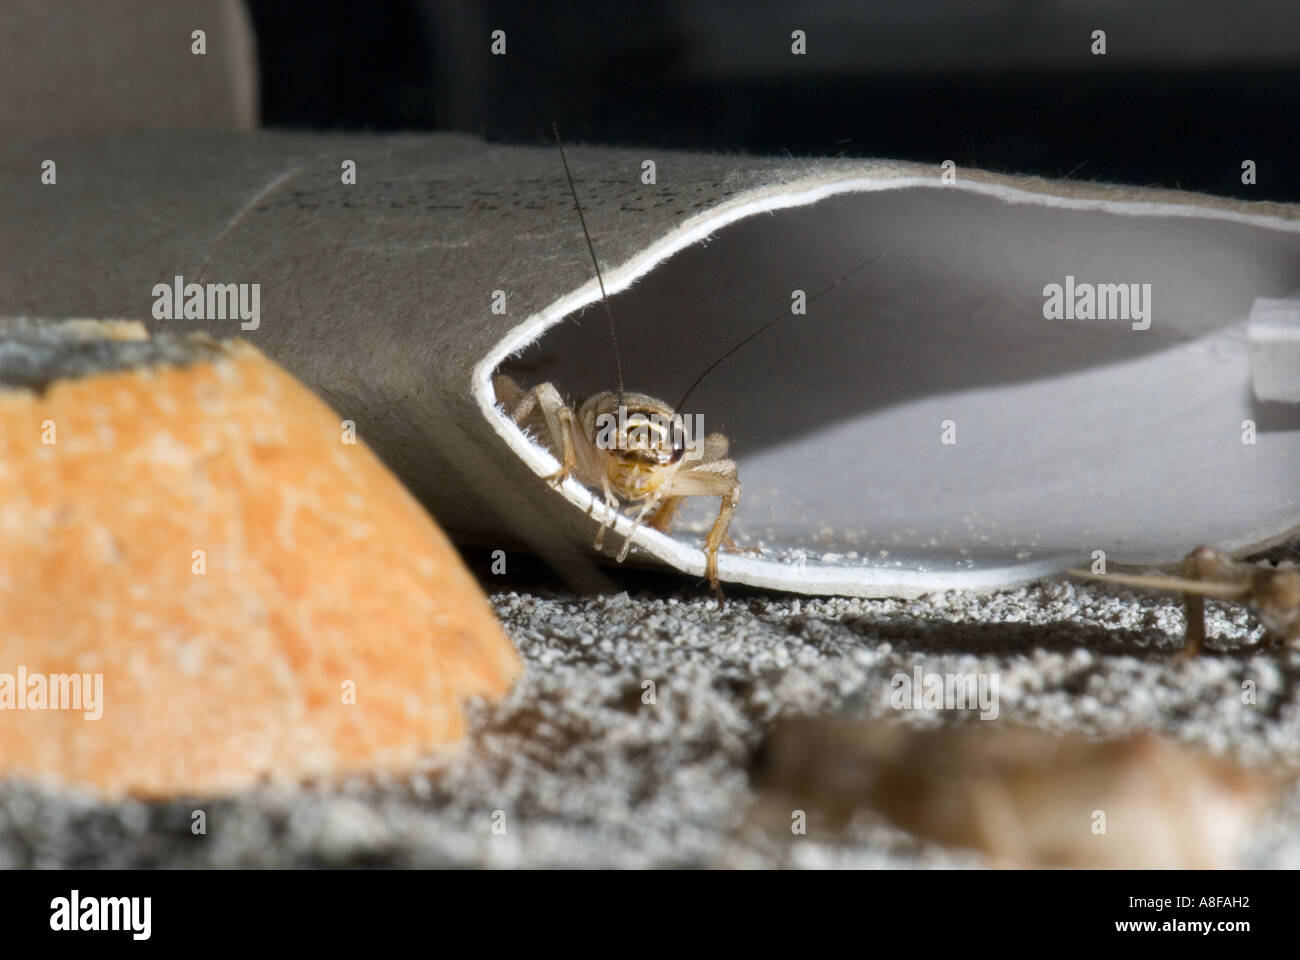 house cricket crickets Gryllidae Gryllinae Gryllus Heimchen Acheta domesticus  grille hopper housecricket hide hidden in a tube Stock Photo